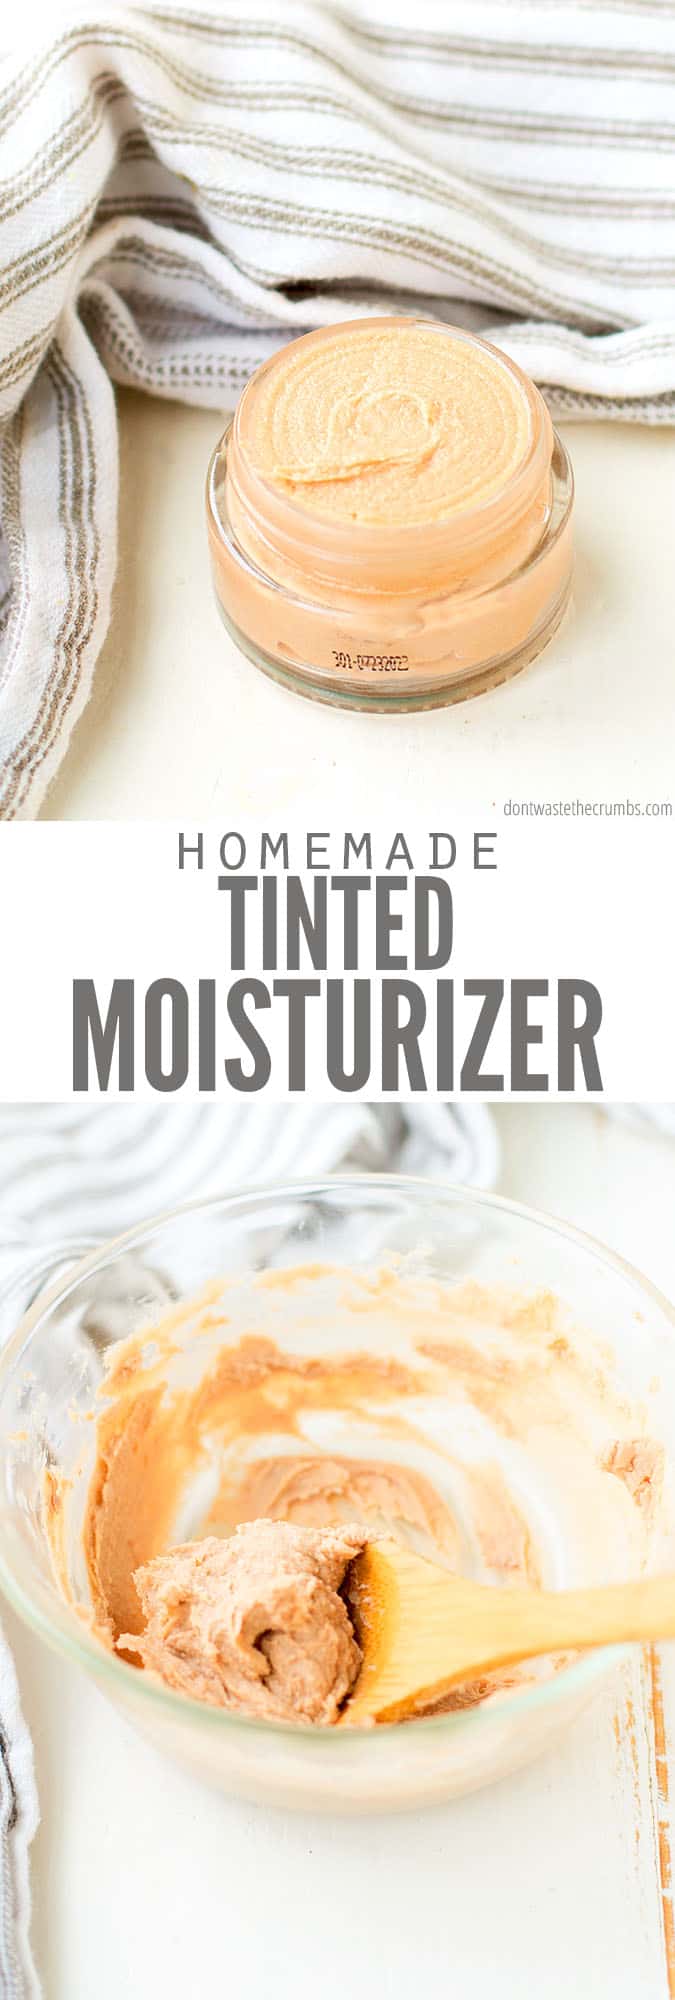 Homemade Tinted Moisturizer | DIY Skincare Recipe